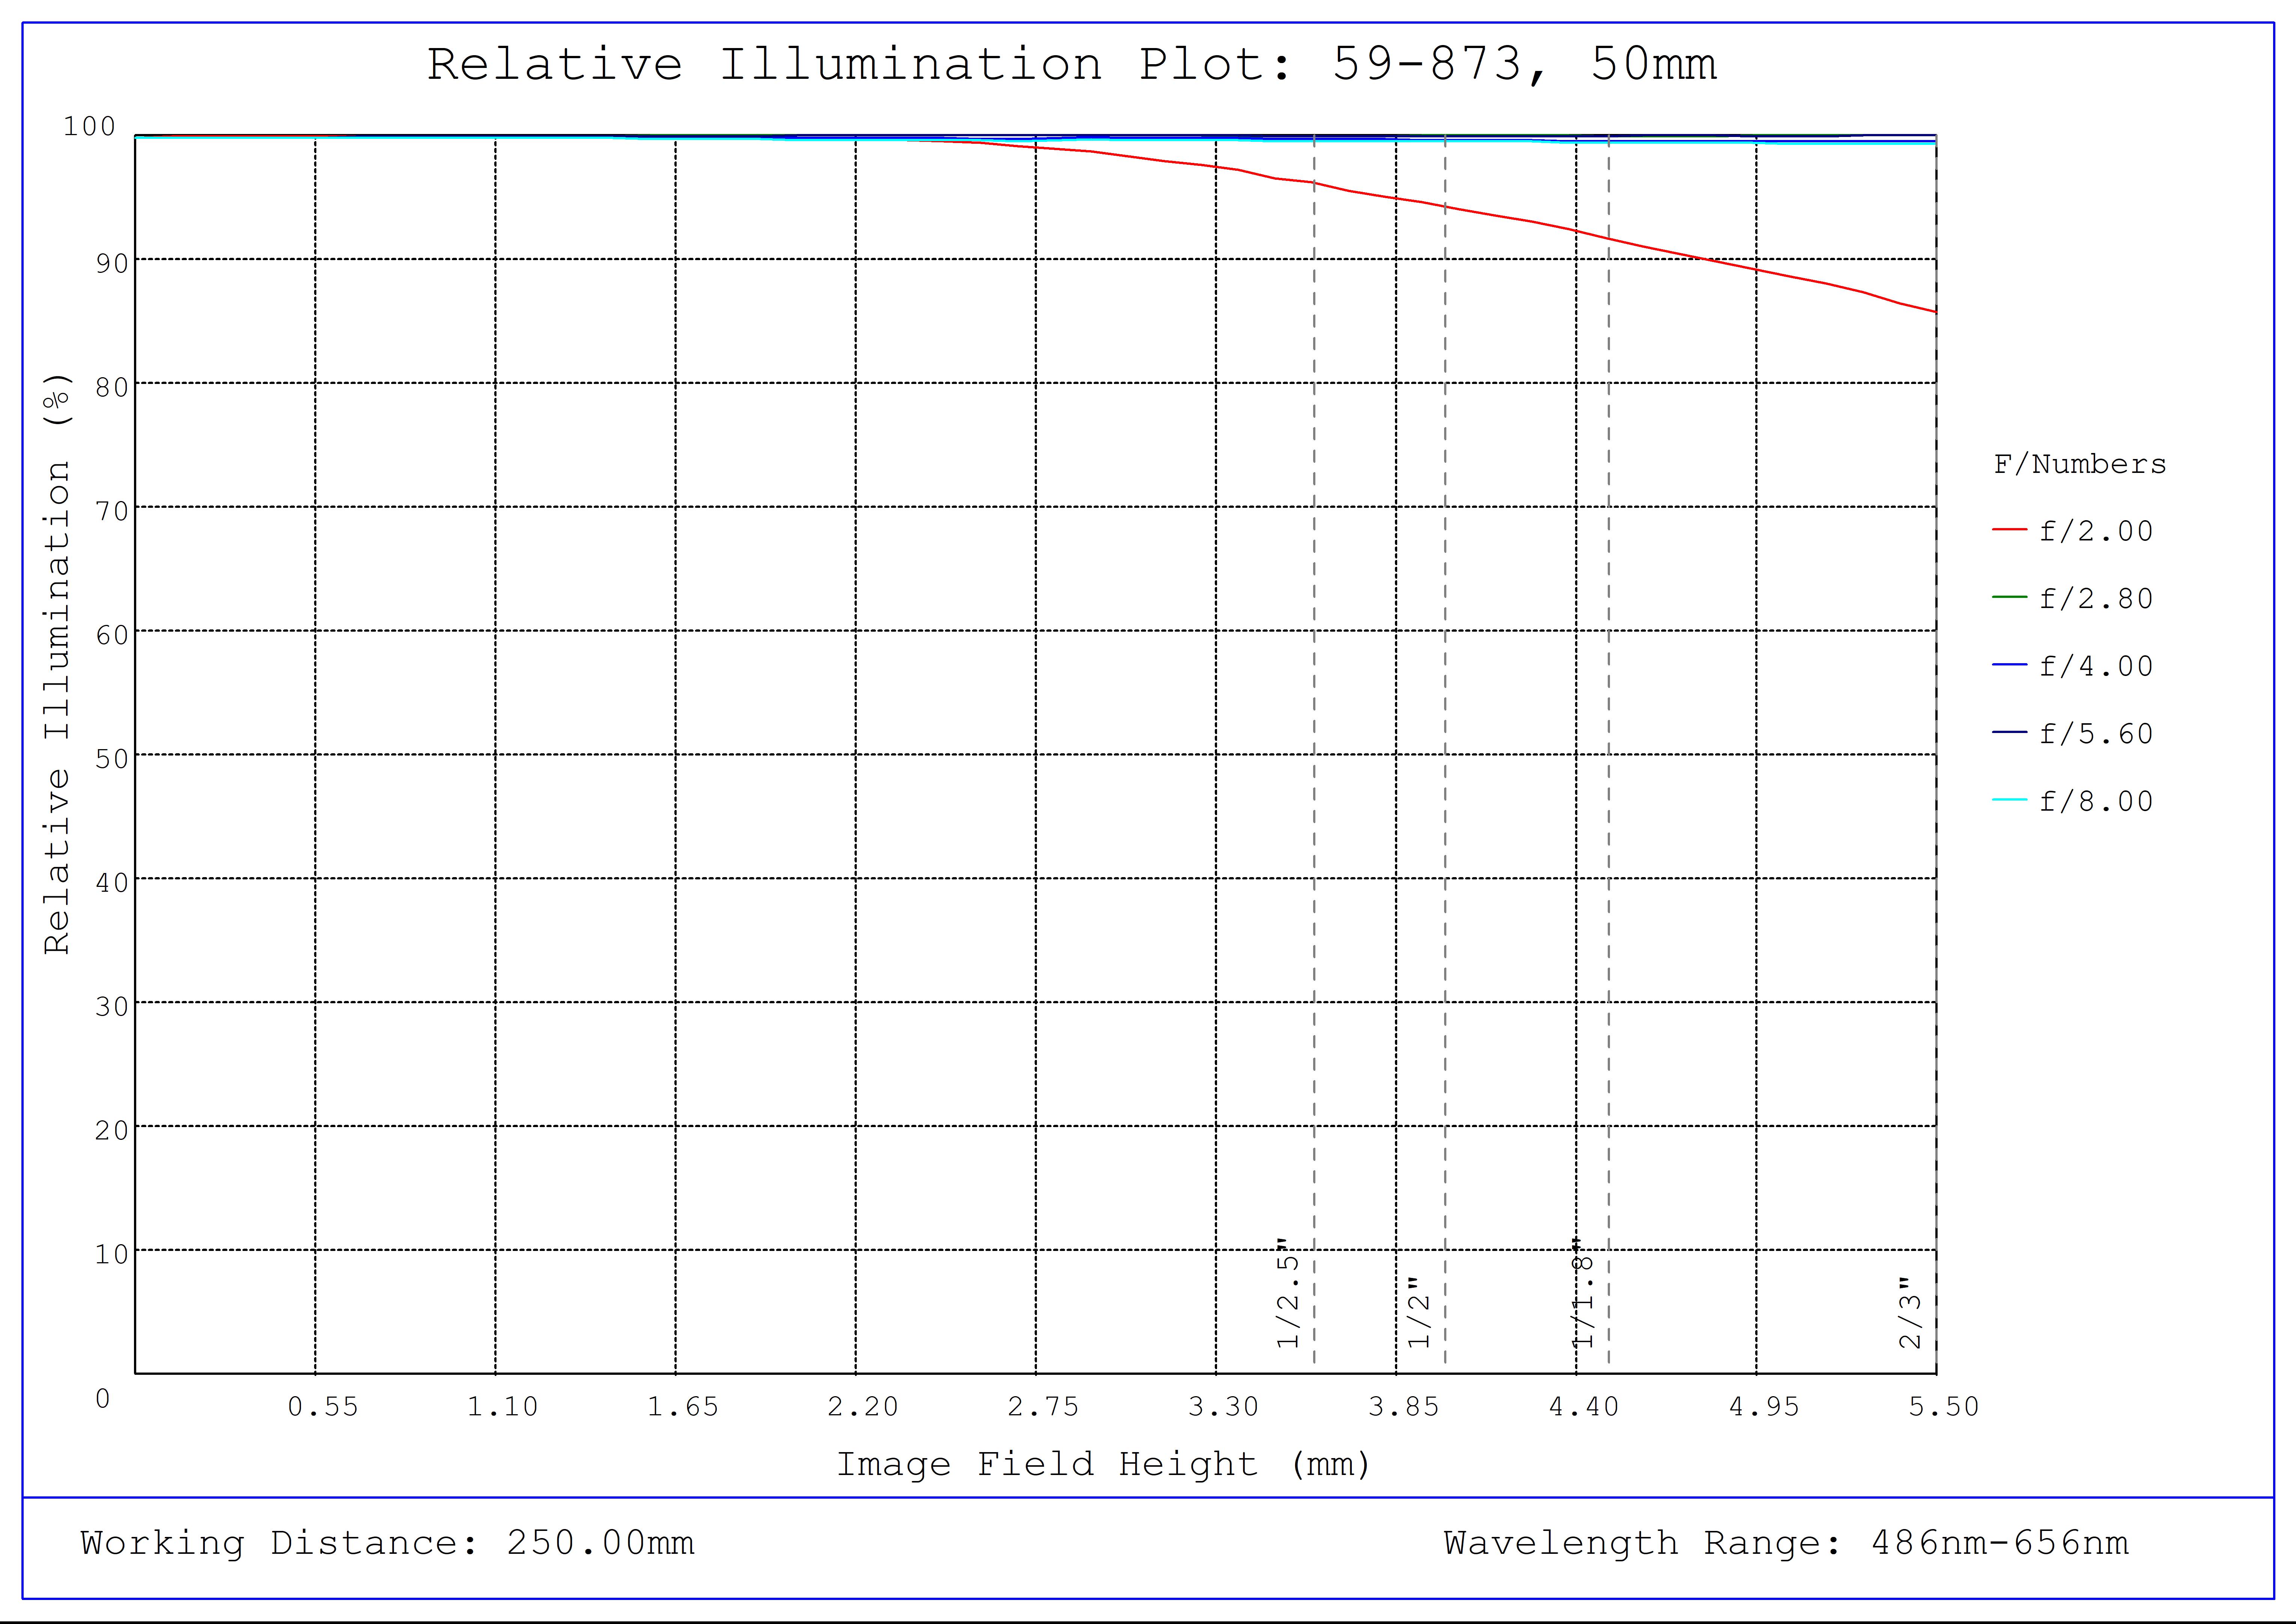 #59-873, 50mm C Series Fixed Focal Length Lens, Relative Illumination Plot